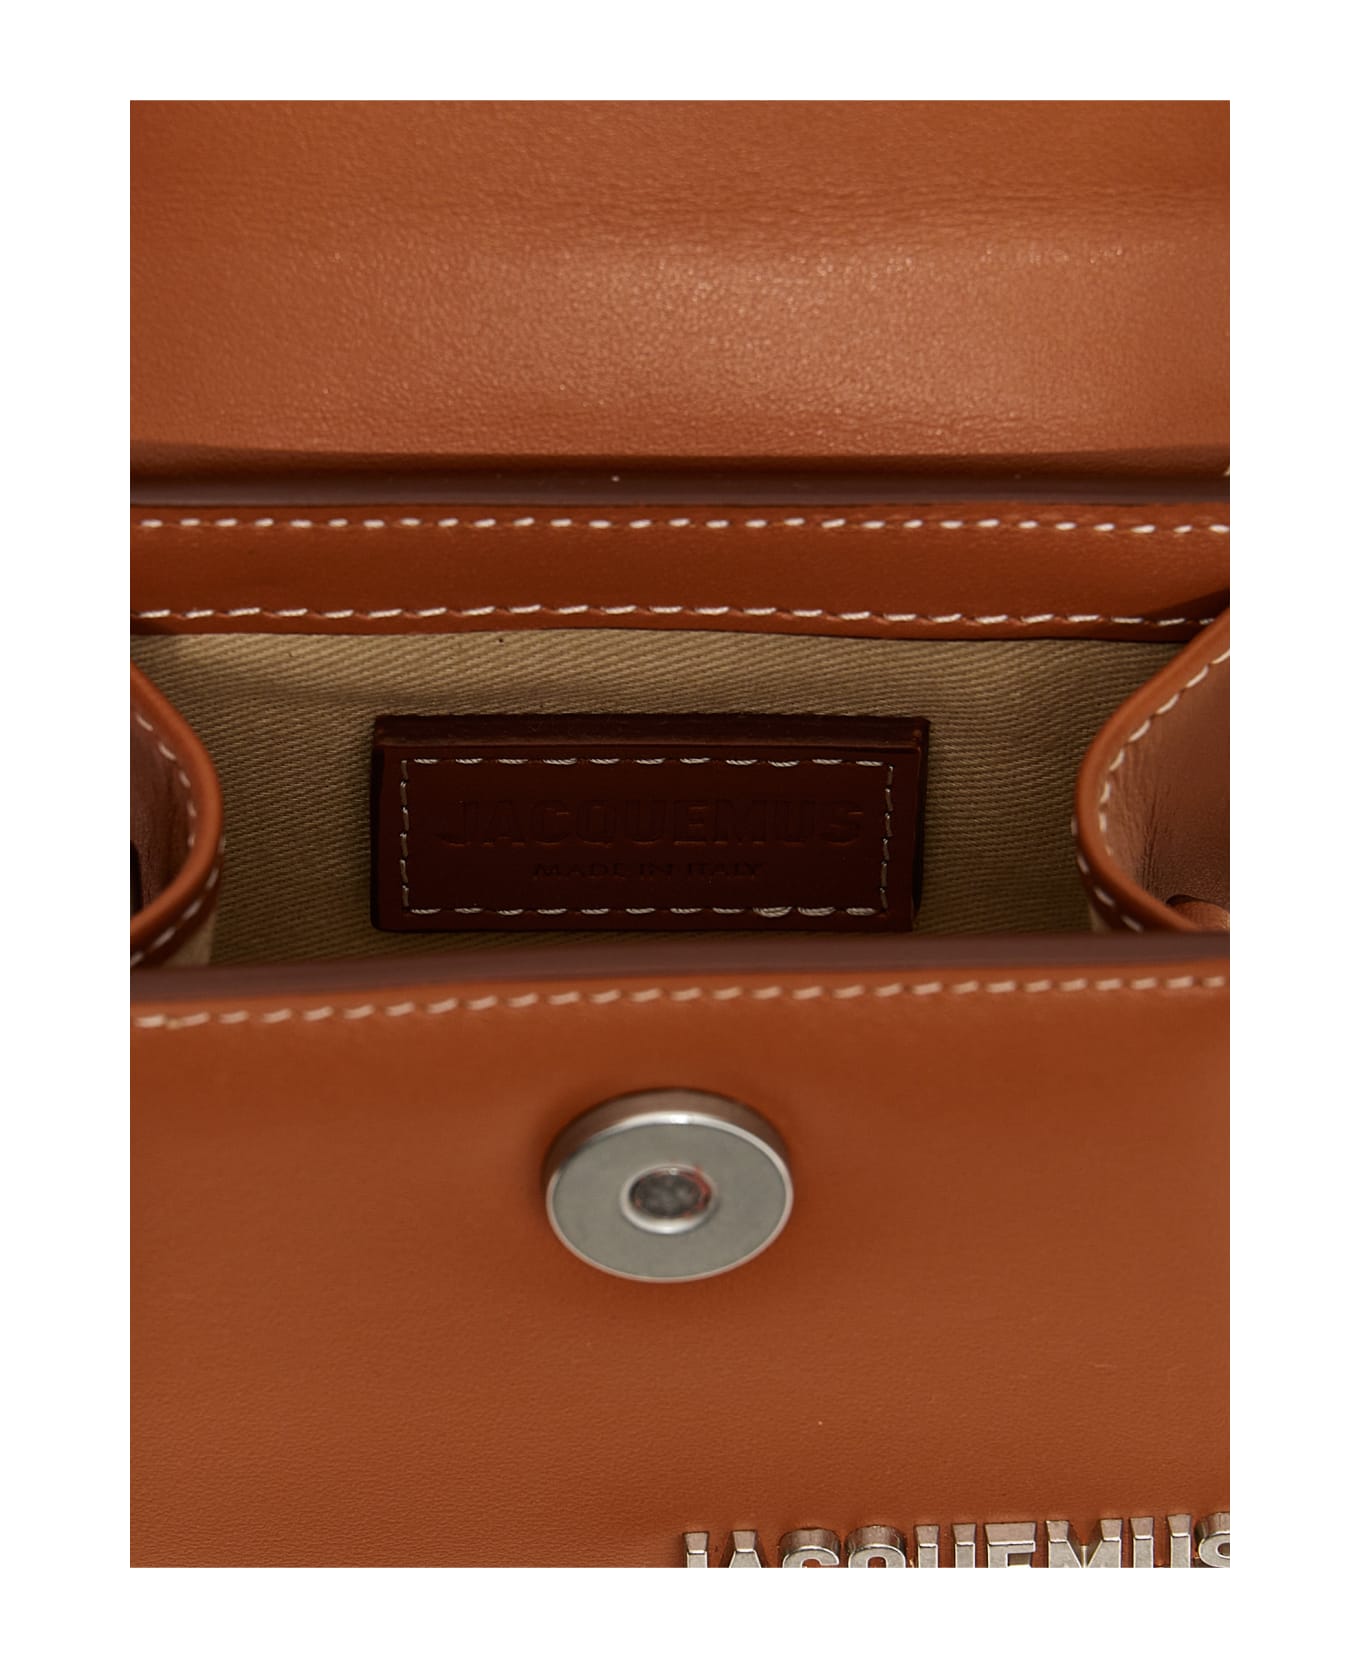 Jacquemus 'le Chiquito Homme Mini' Handbag - Brown